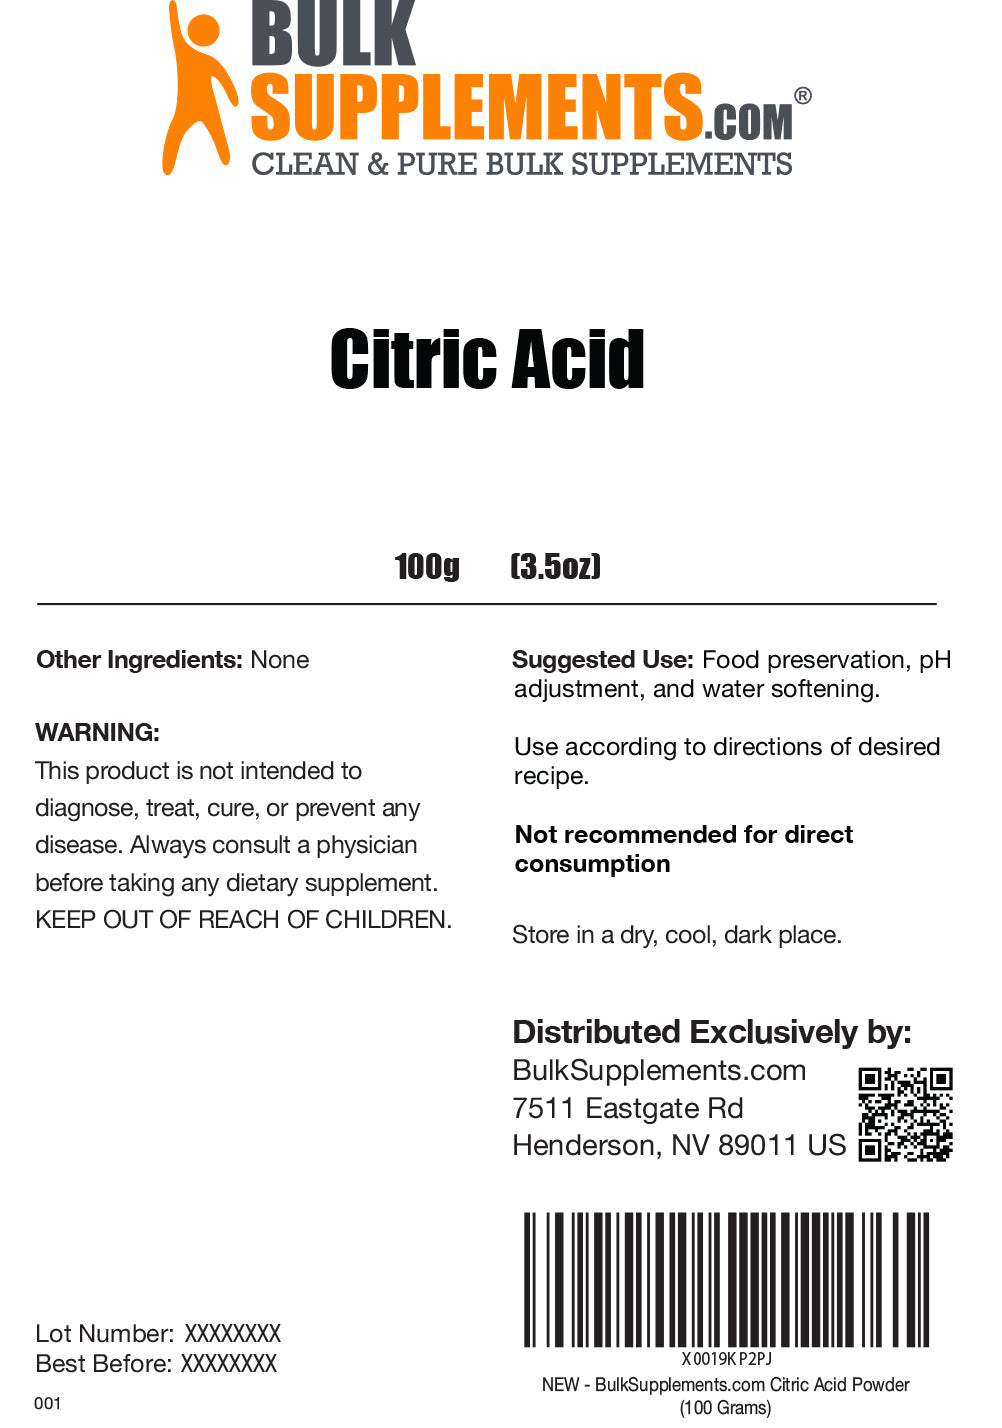 Citric Acid powder label 100g